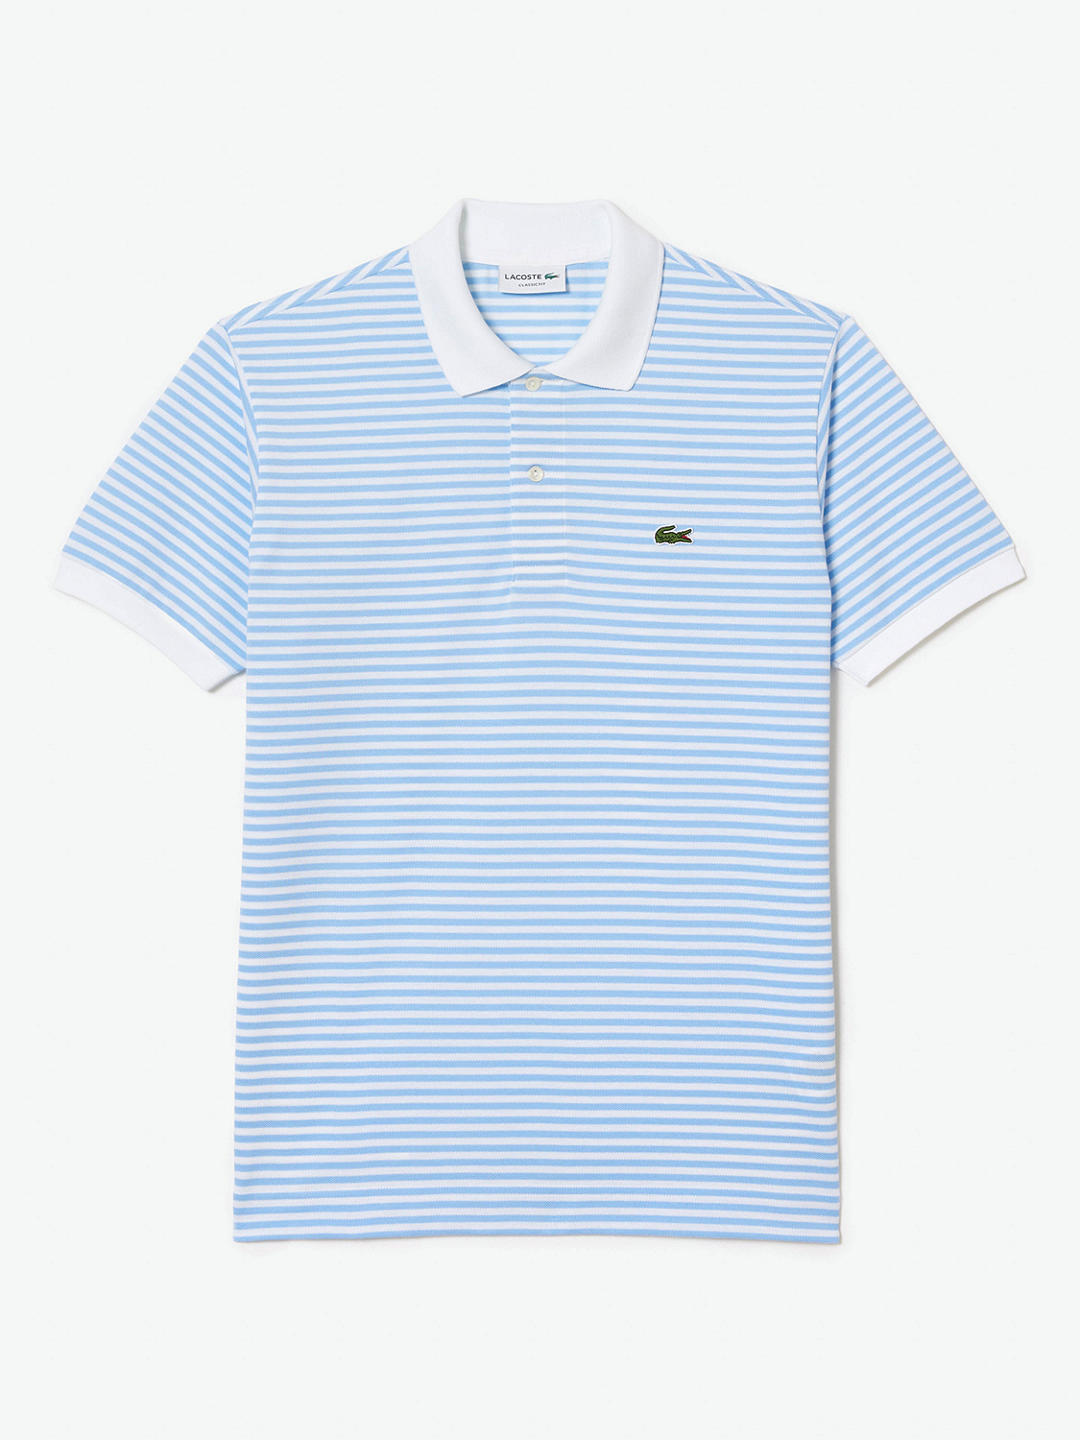 Lacoste Core Essential Striped Cotton Polo Shirt, Blue/White